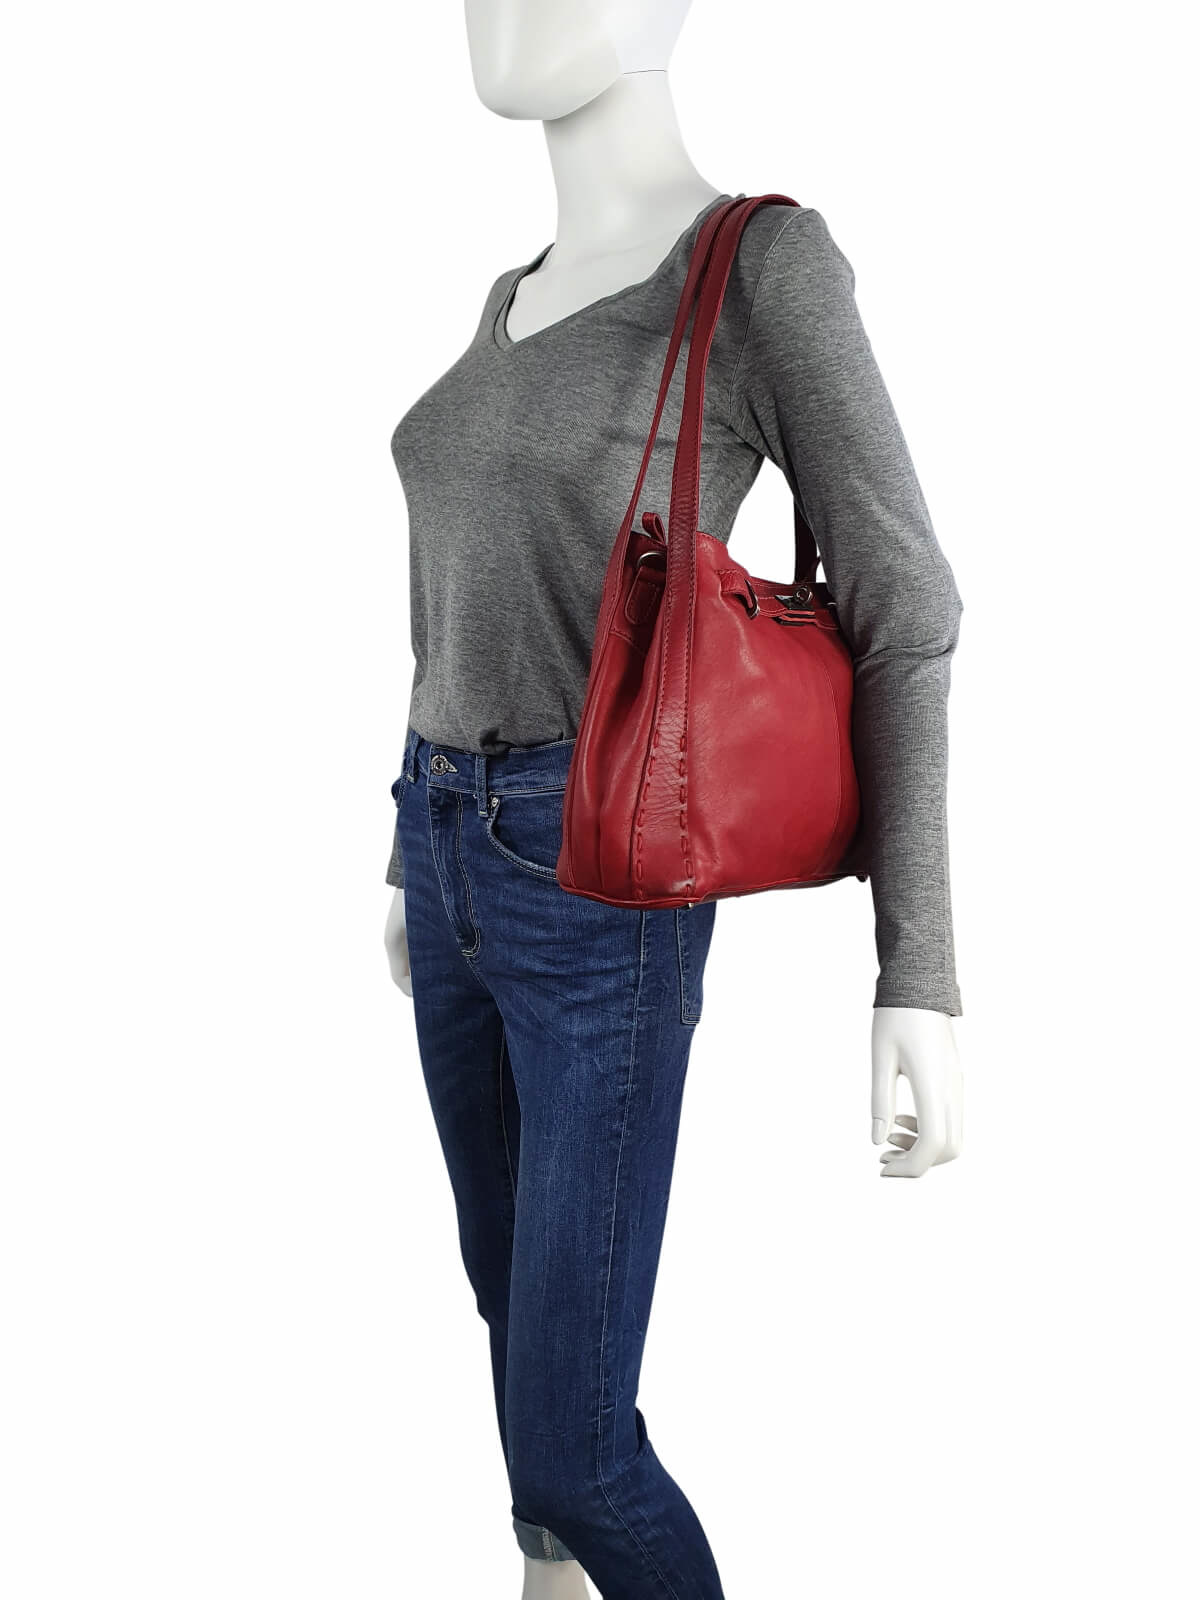 Handtasche Audrey, Vintage-Leder, rot, fair produziert - manbefair